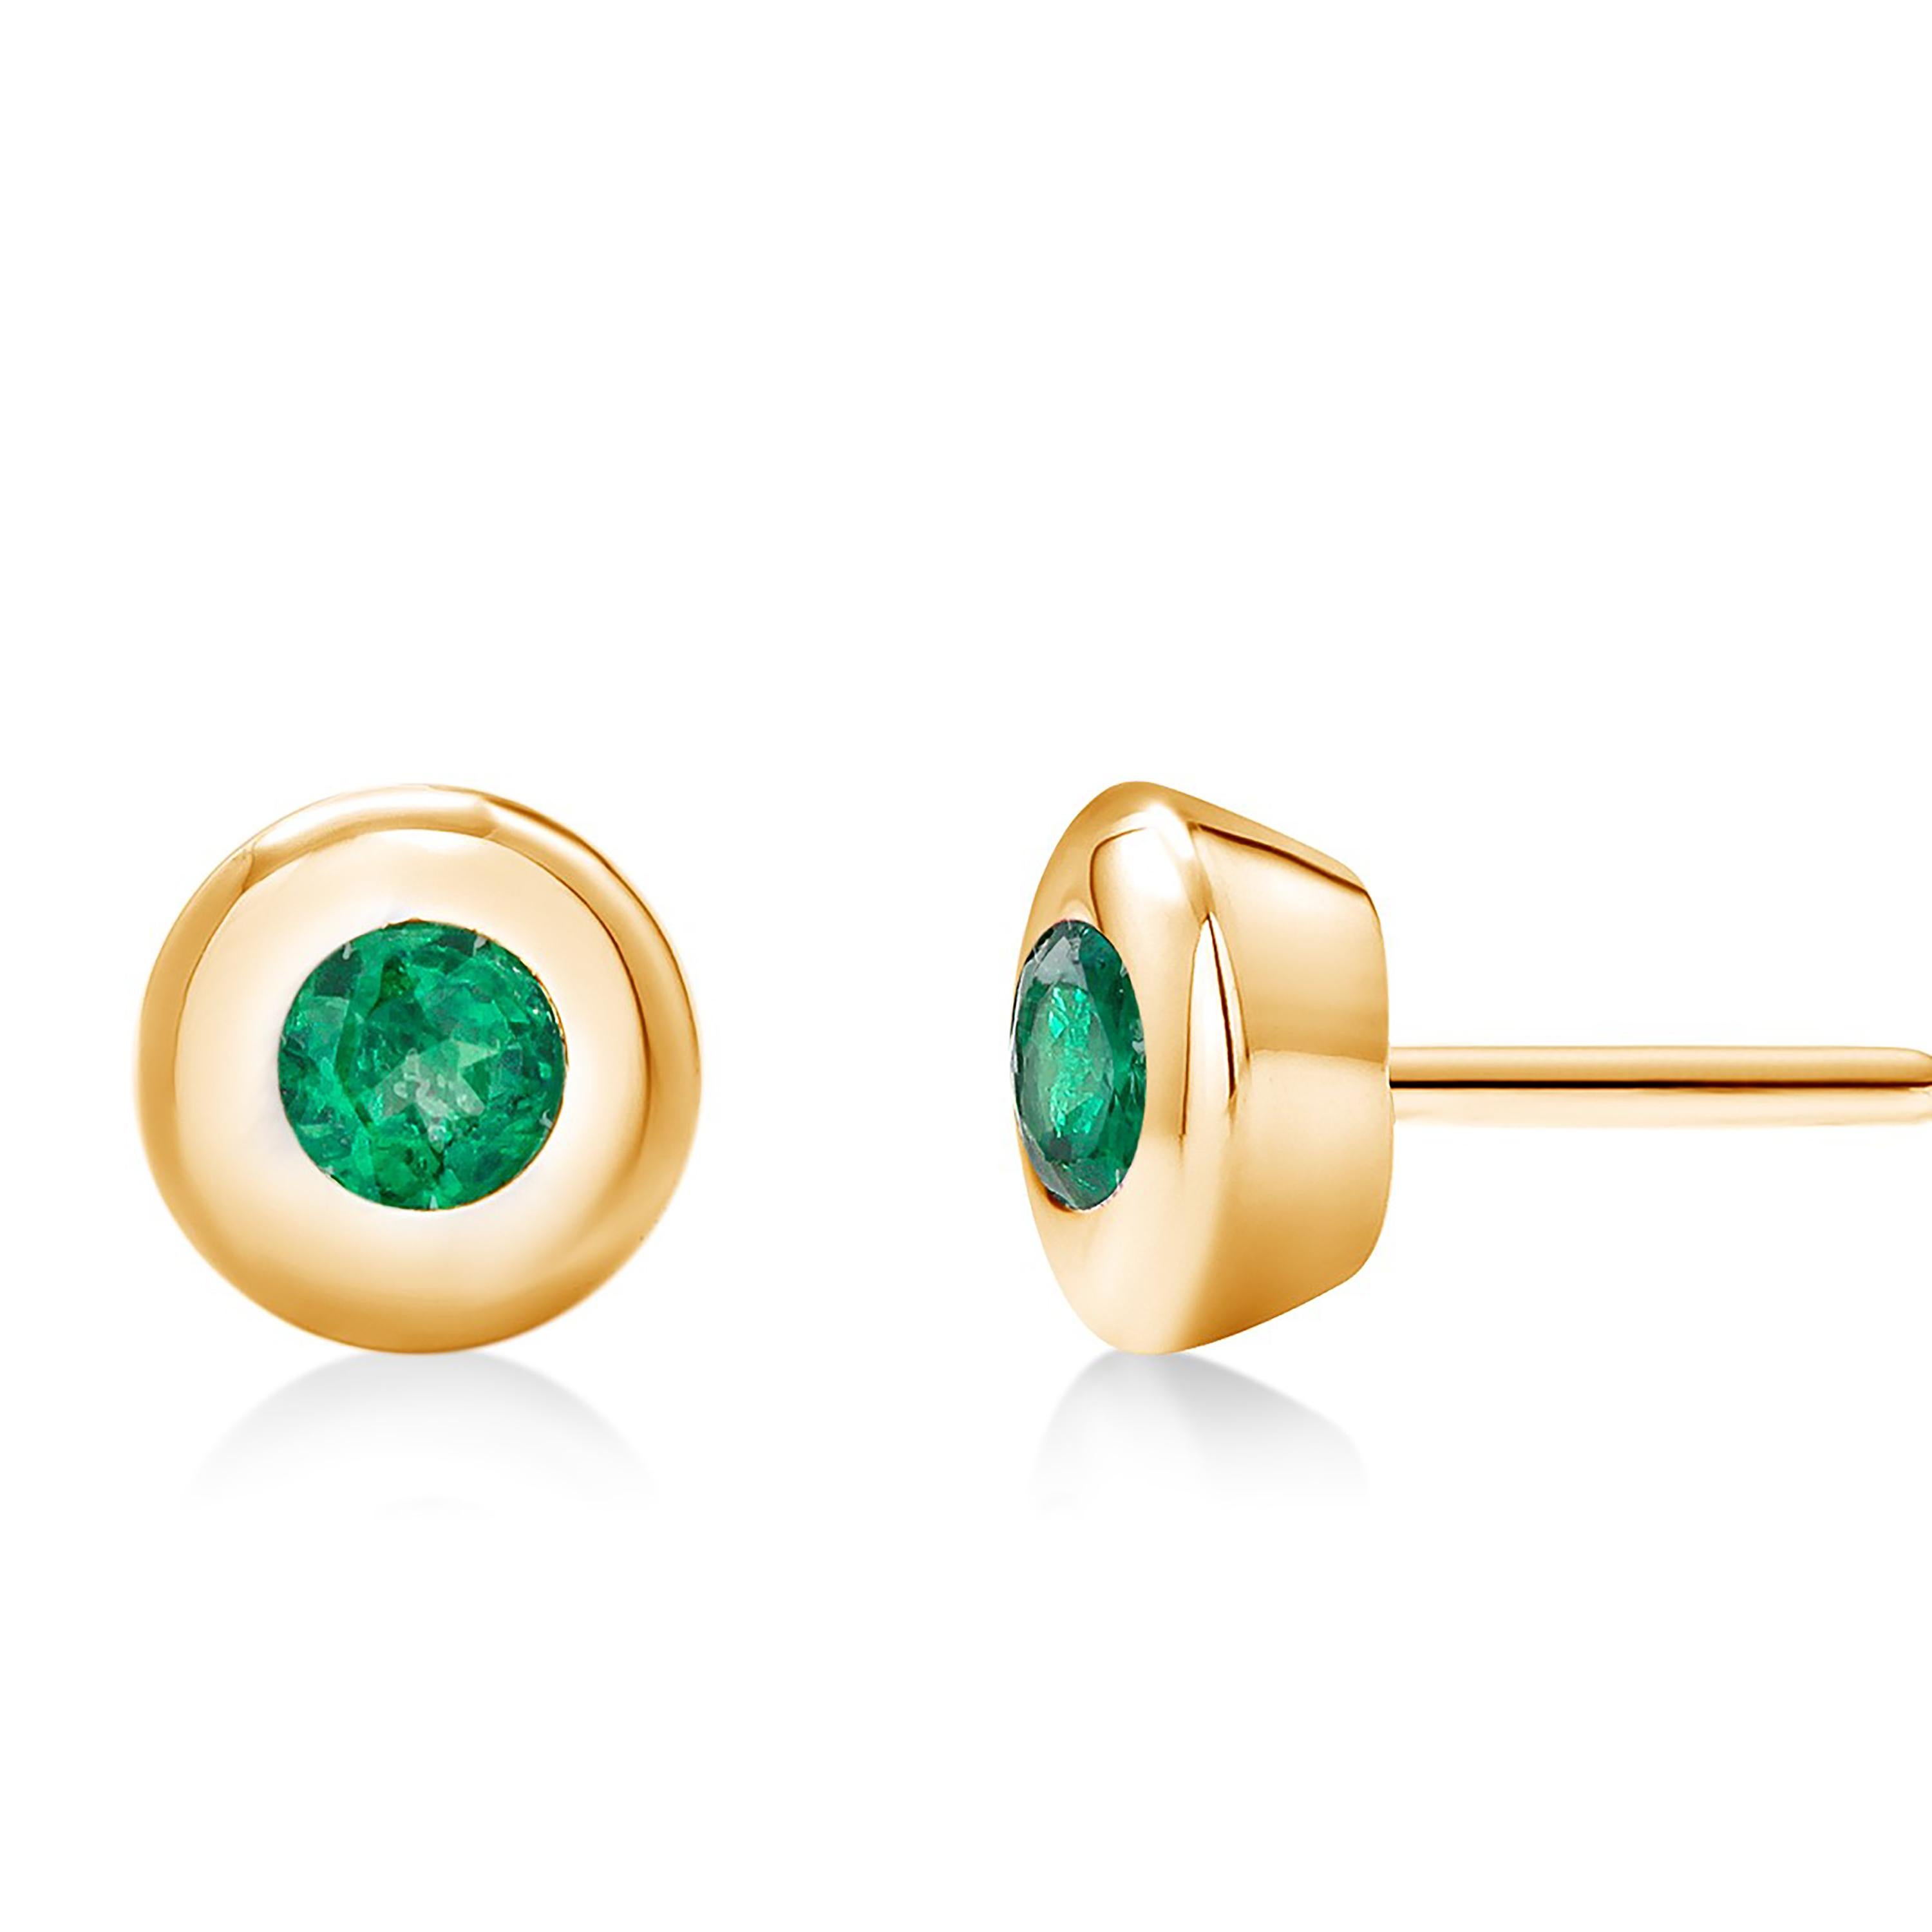 Round Cut 14 Karat Yellow Gold Bezel Set Emerald Stud Earrings Weighing 0.30 Carat